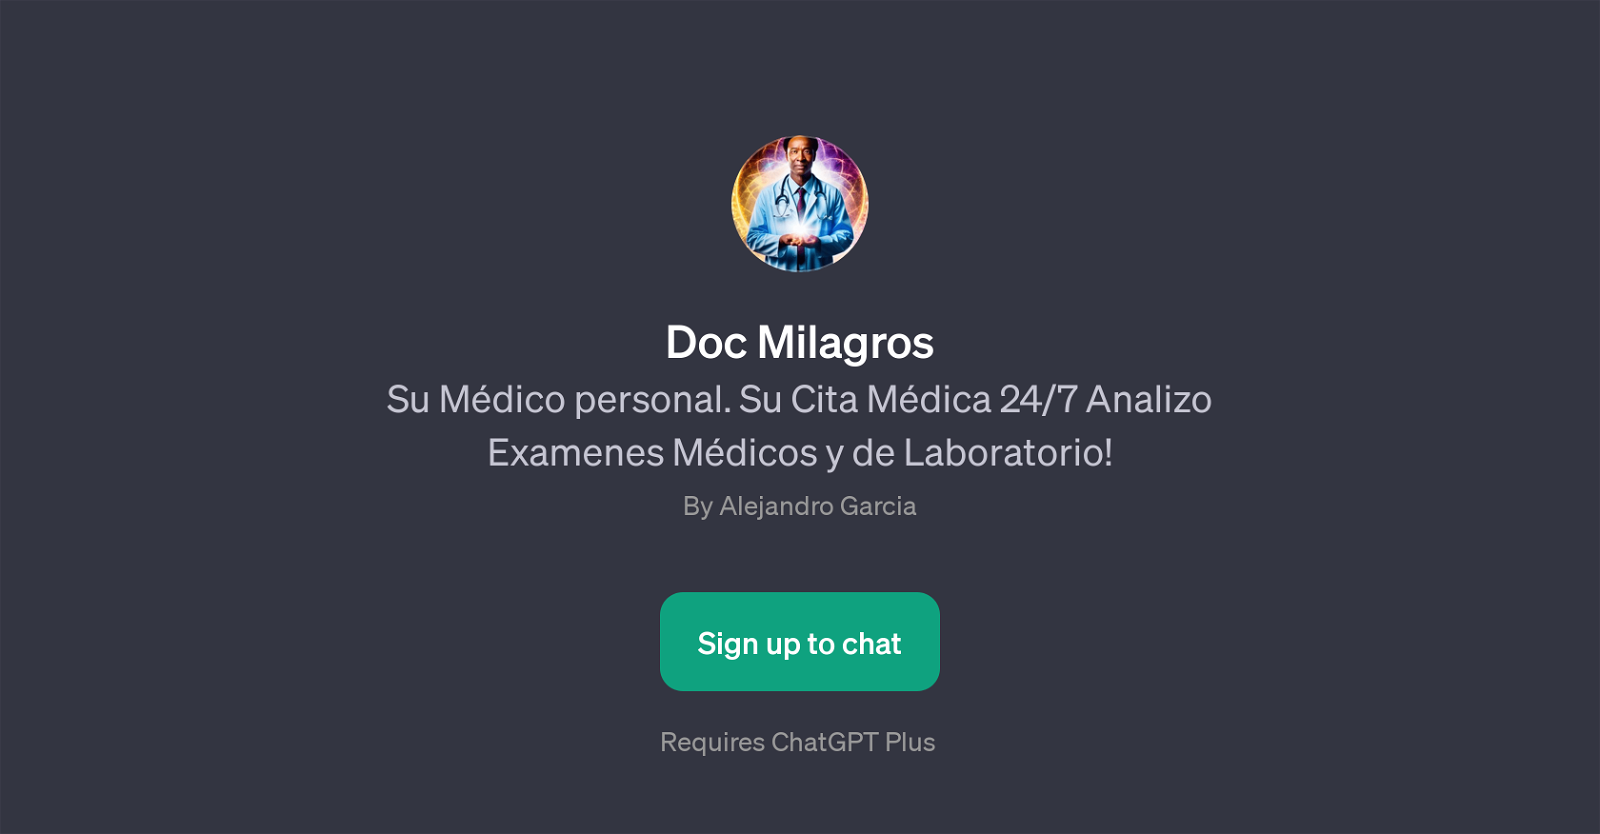 Doc Milagros website